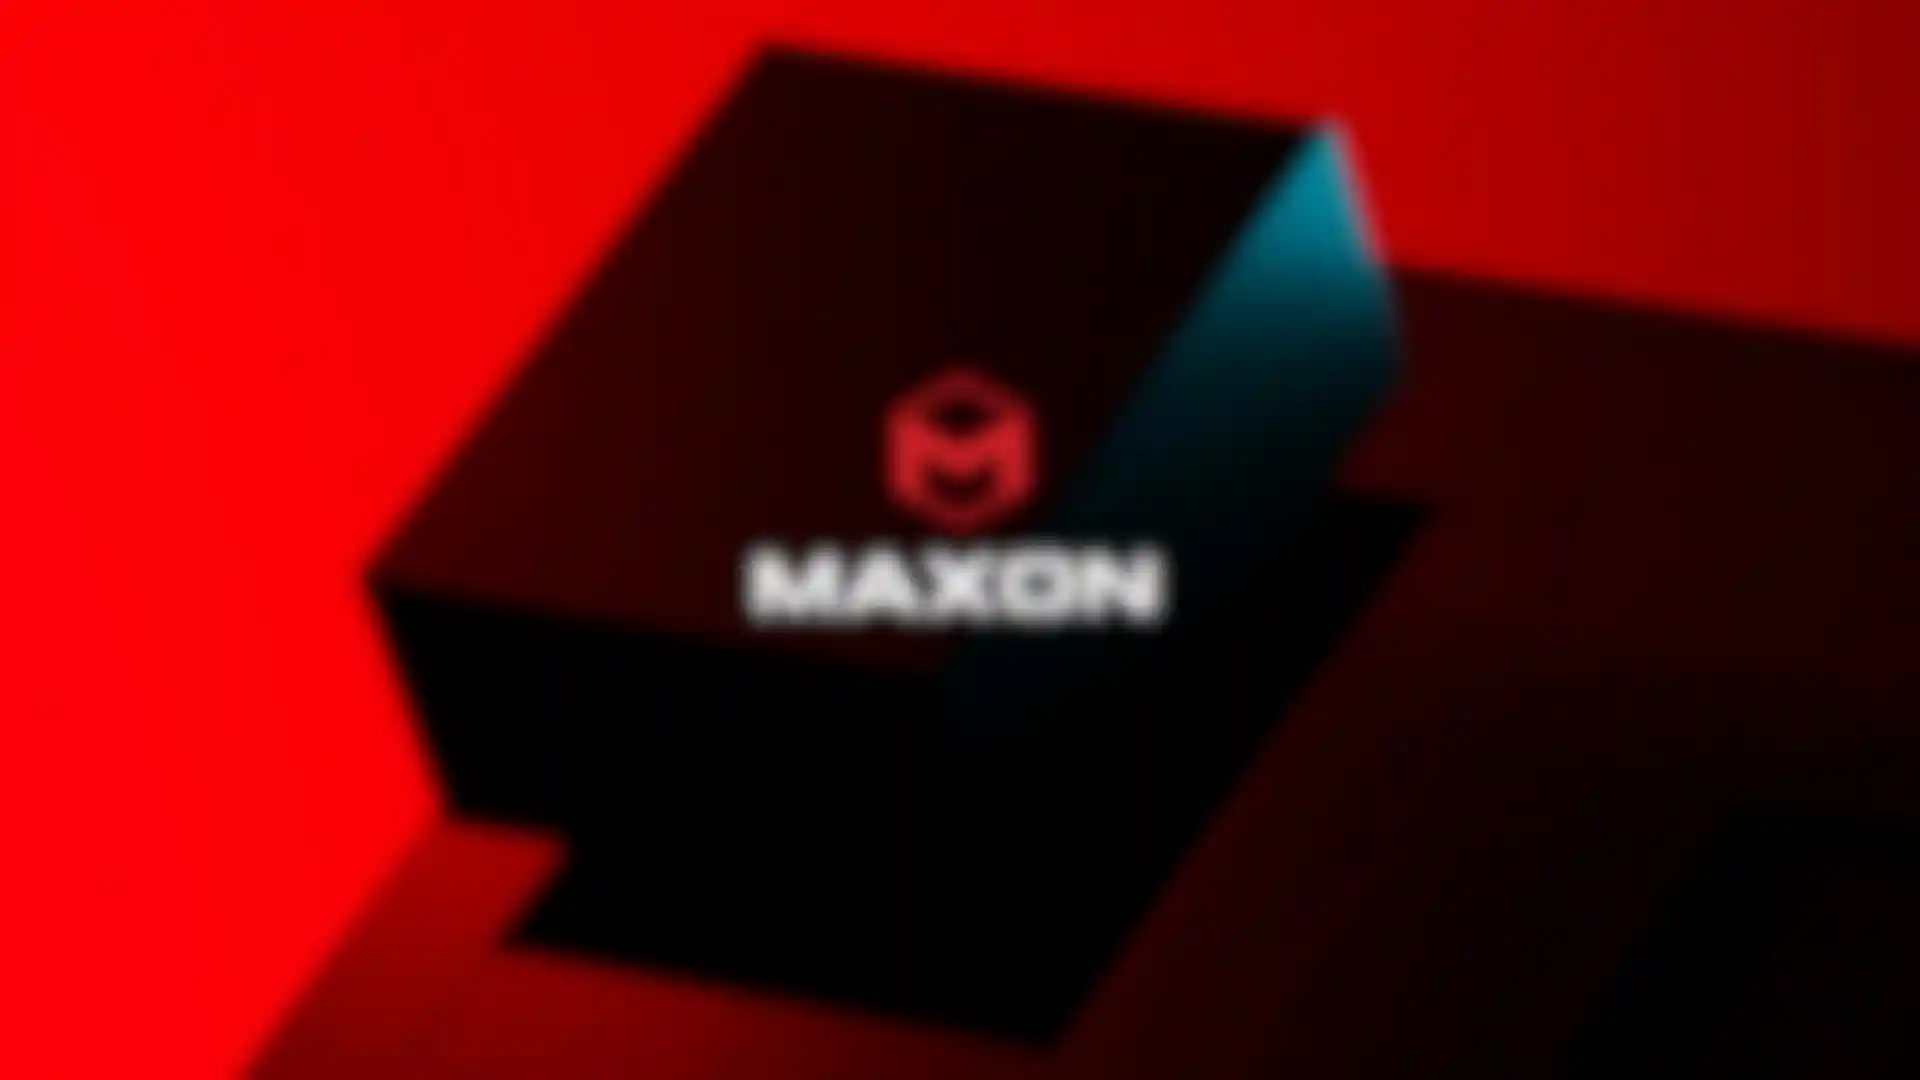 Maxon 새로운 기업 이미지 통합 발표 image